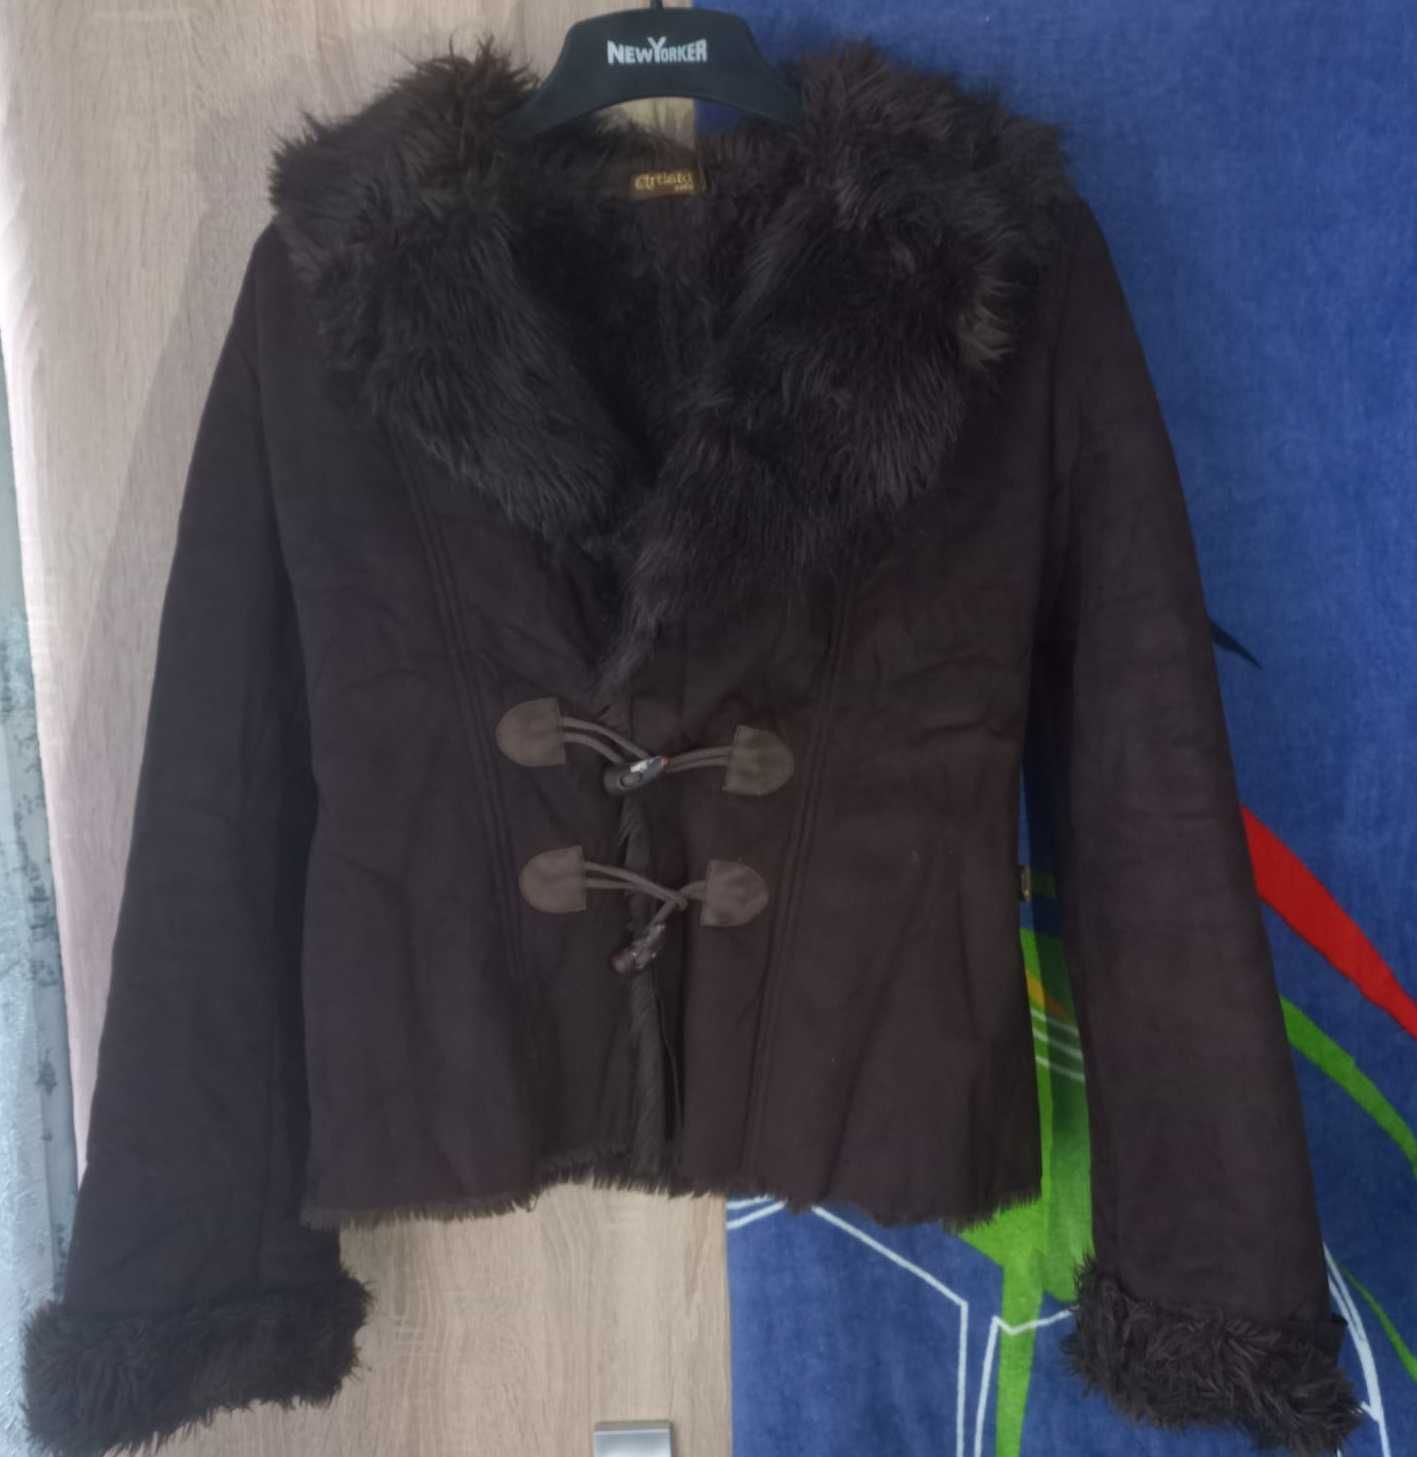 Cojoc/palton/jacheta din blana maro pentru femei/dame marimea S